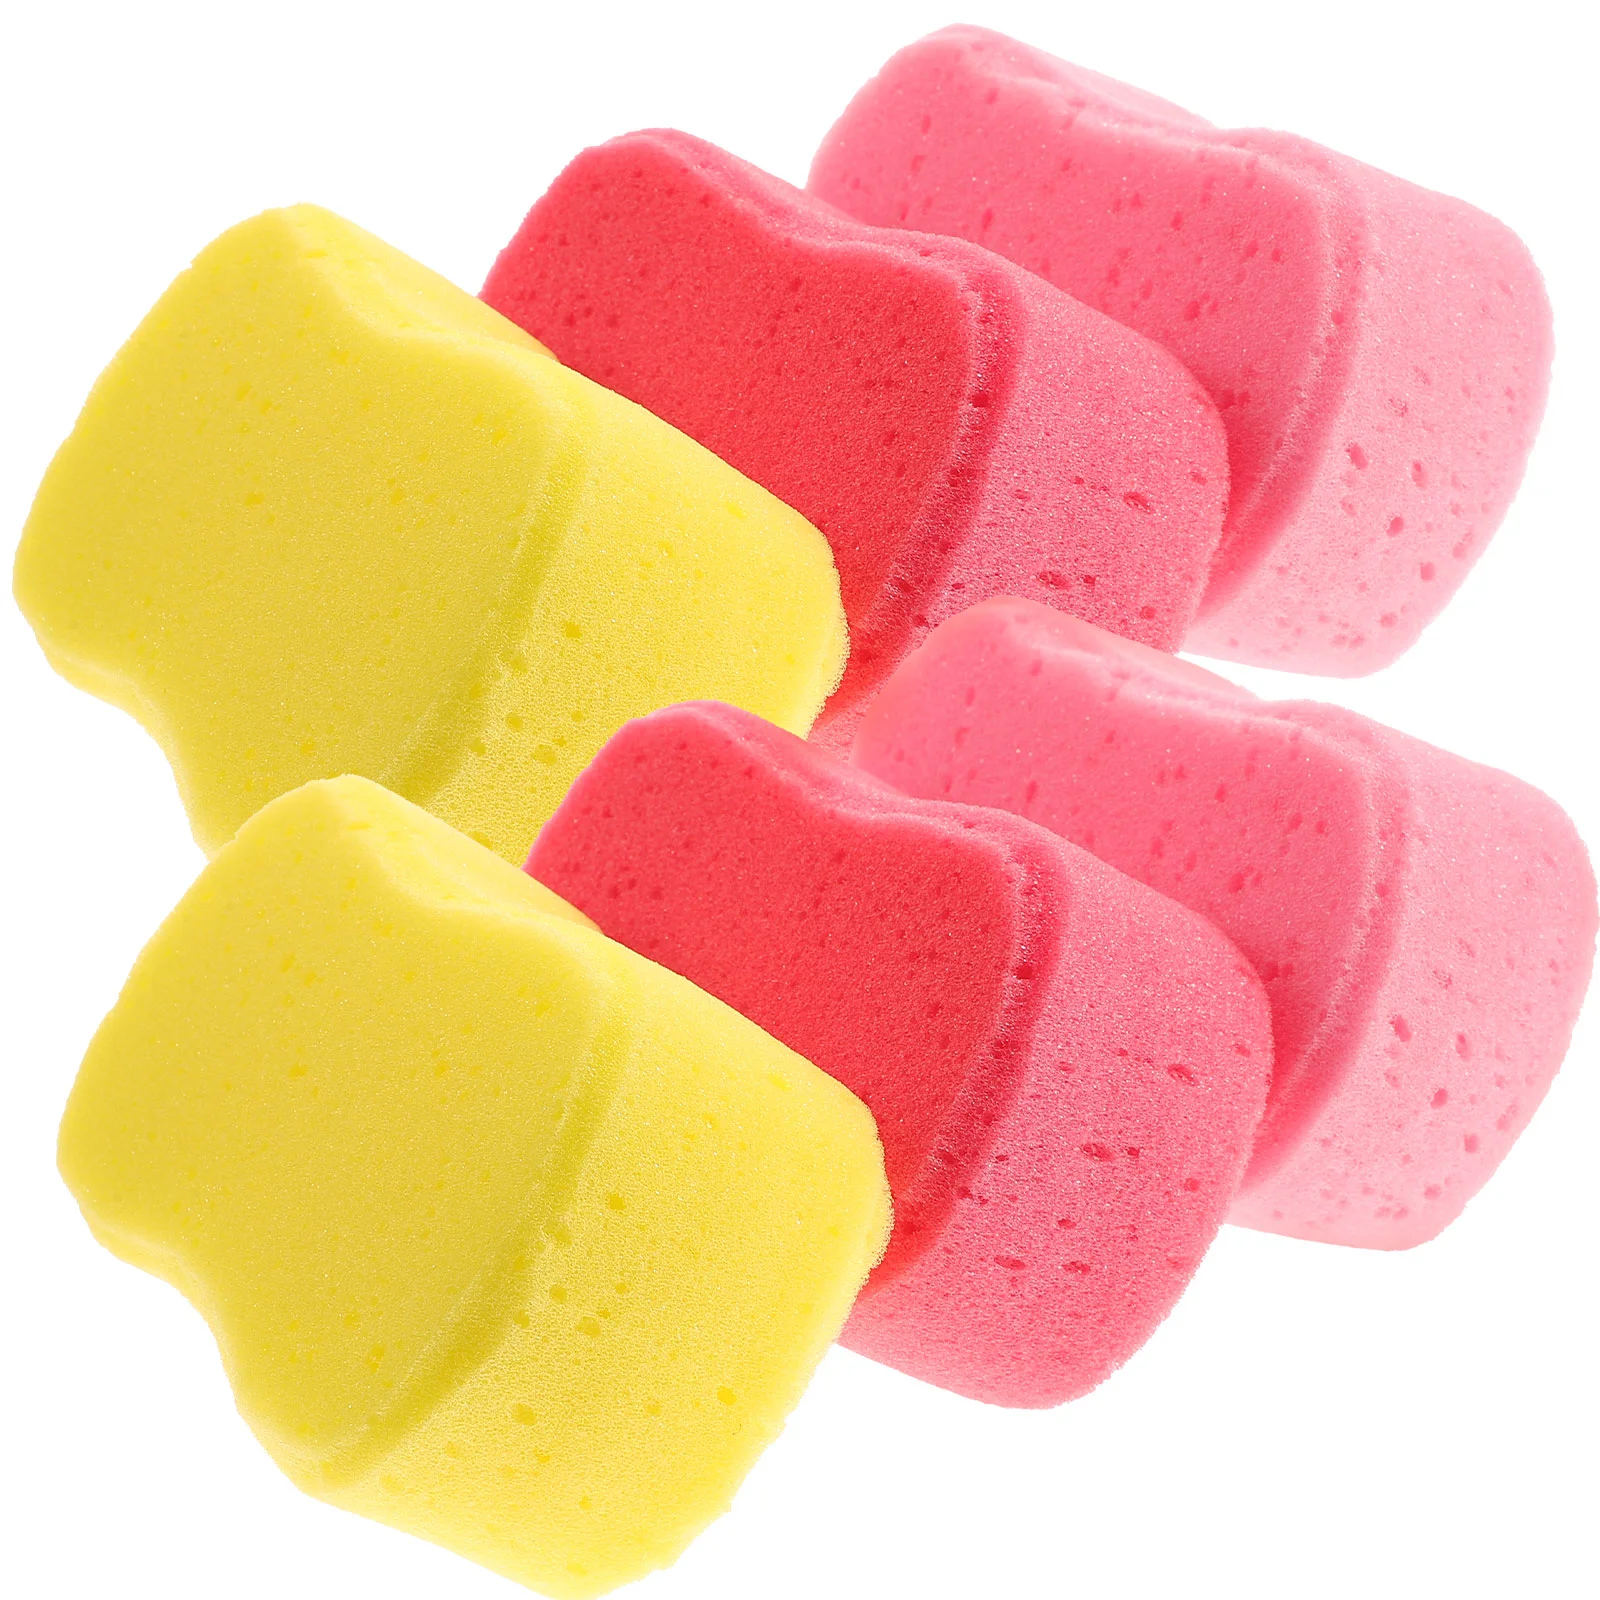 

8pcs Bath Sponge£¬ Exfoliating Bath Scrubbers Bathing Accessories for Children Adults Assorted Color Body sponges